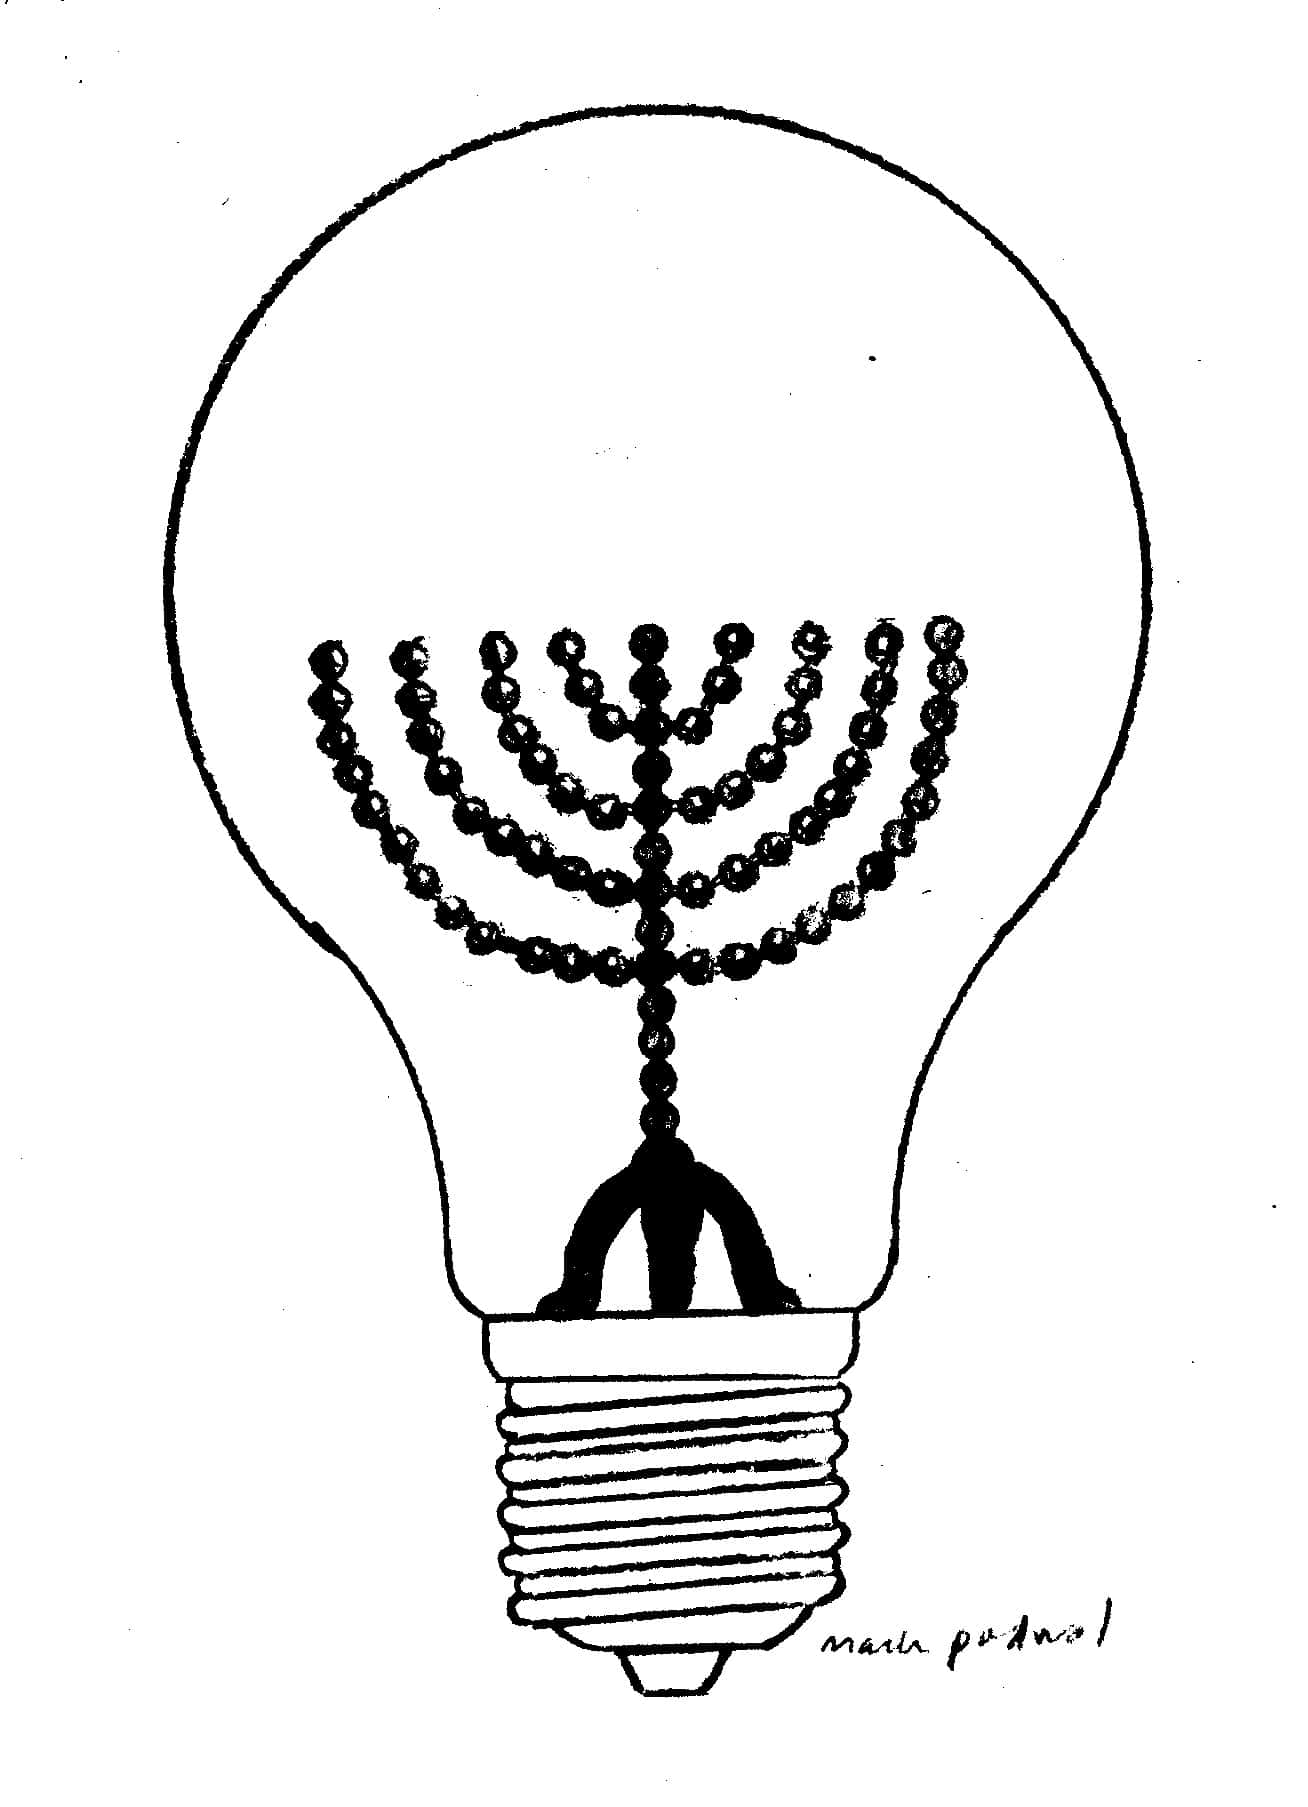 Light bulb menorah by Mark Podwal